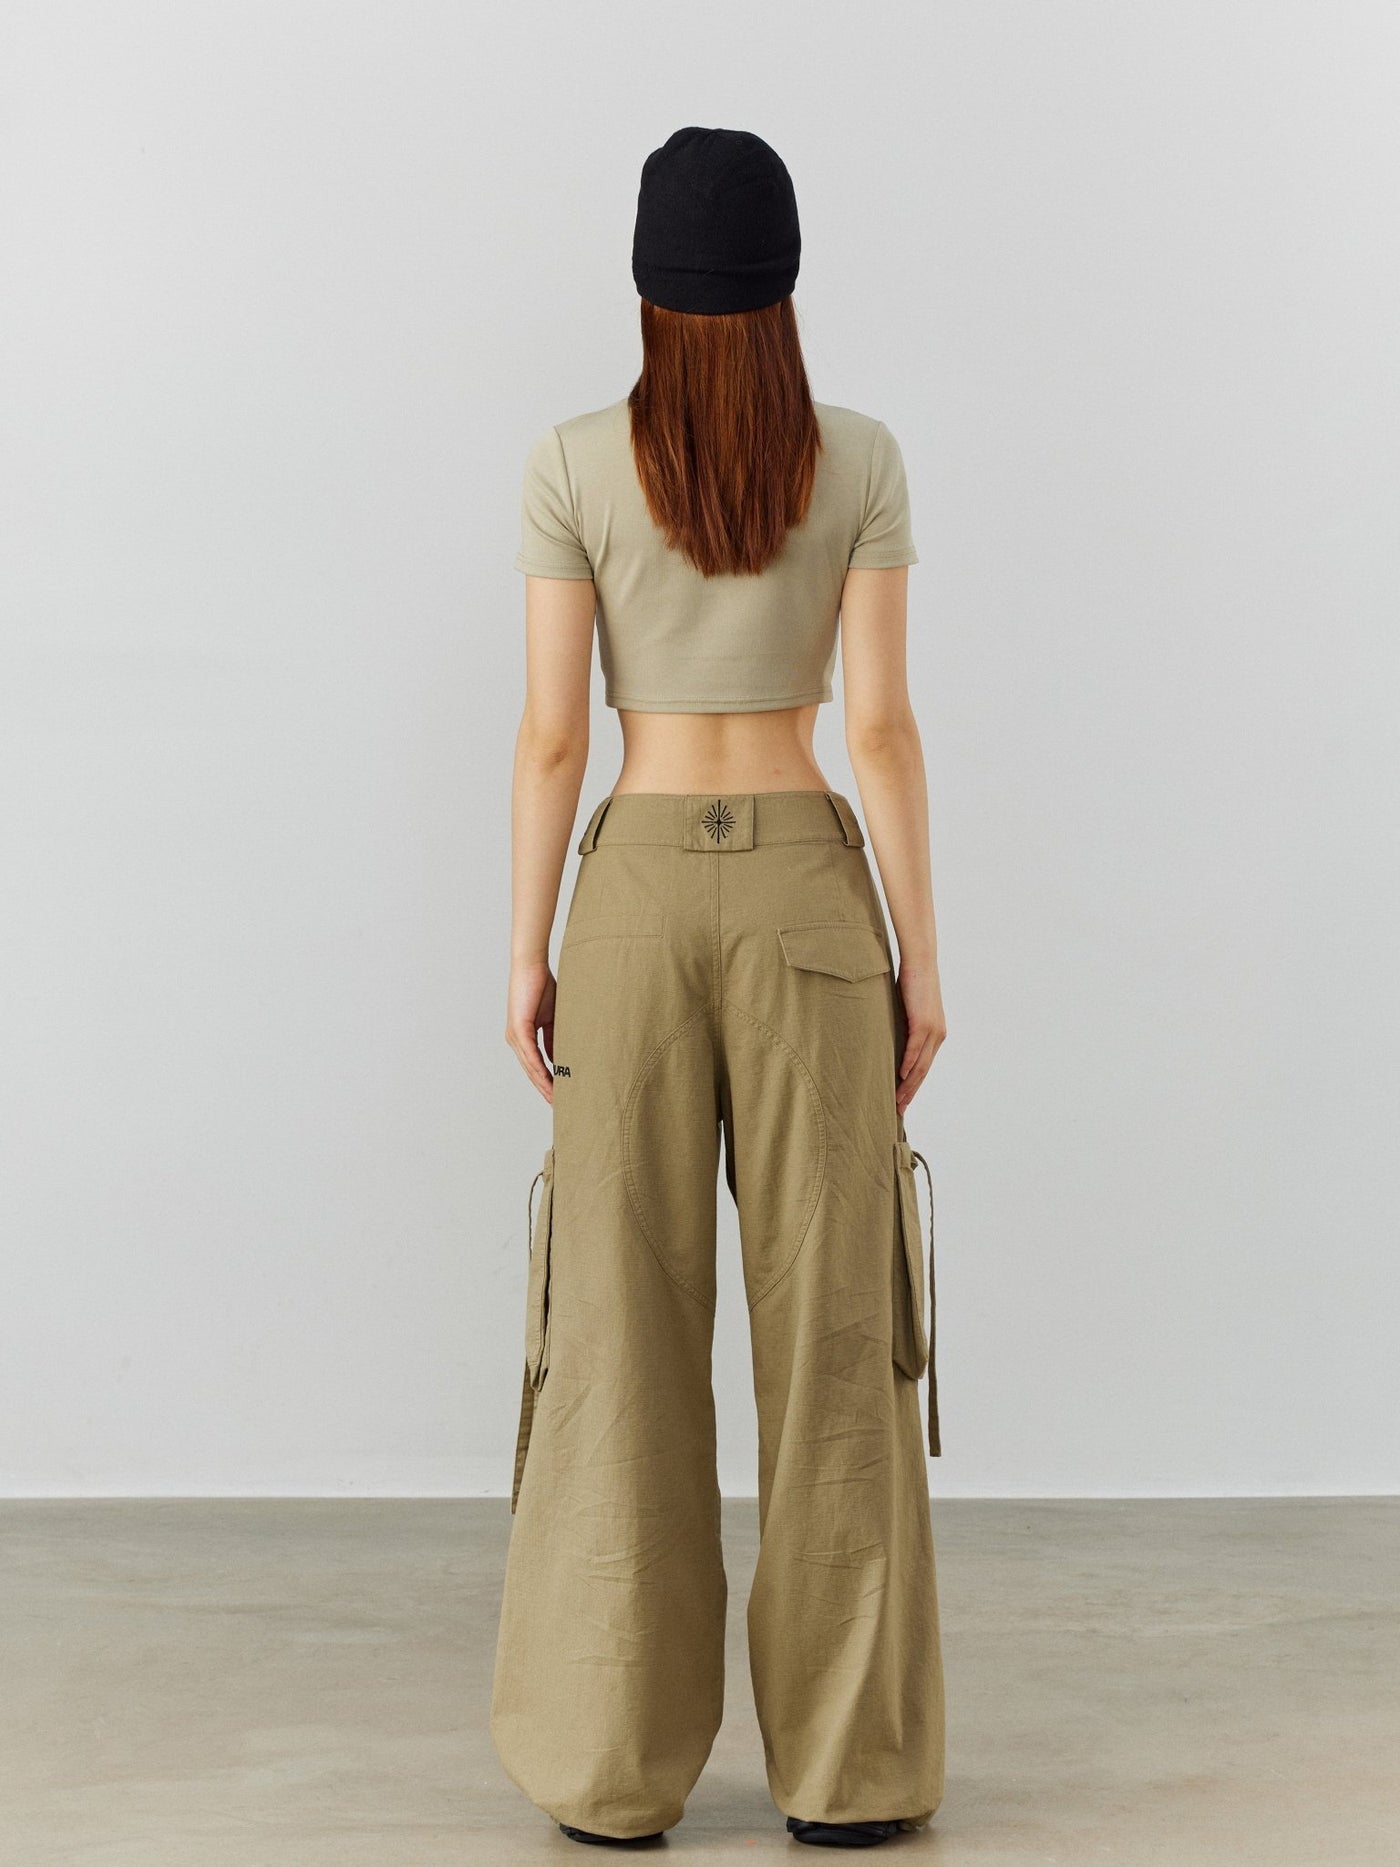 American Fashion Thin Casual Pants ACM0024